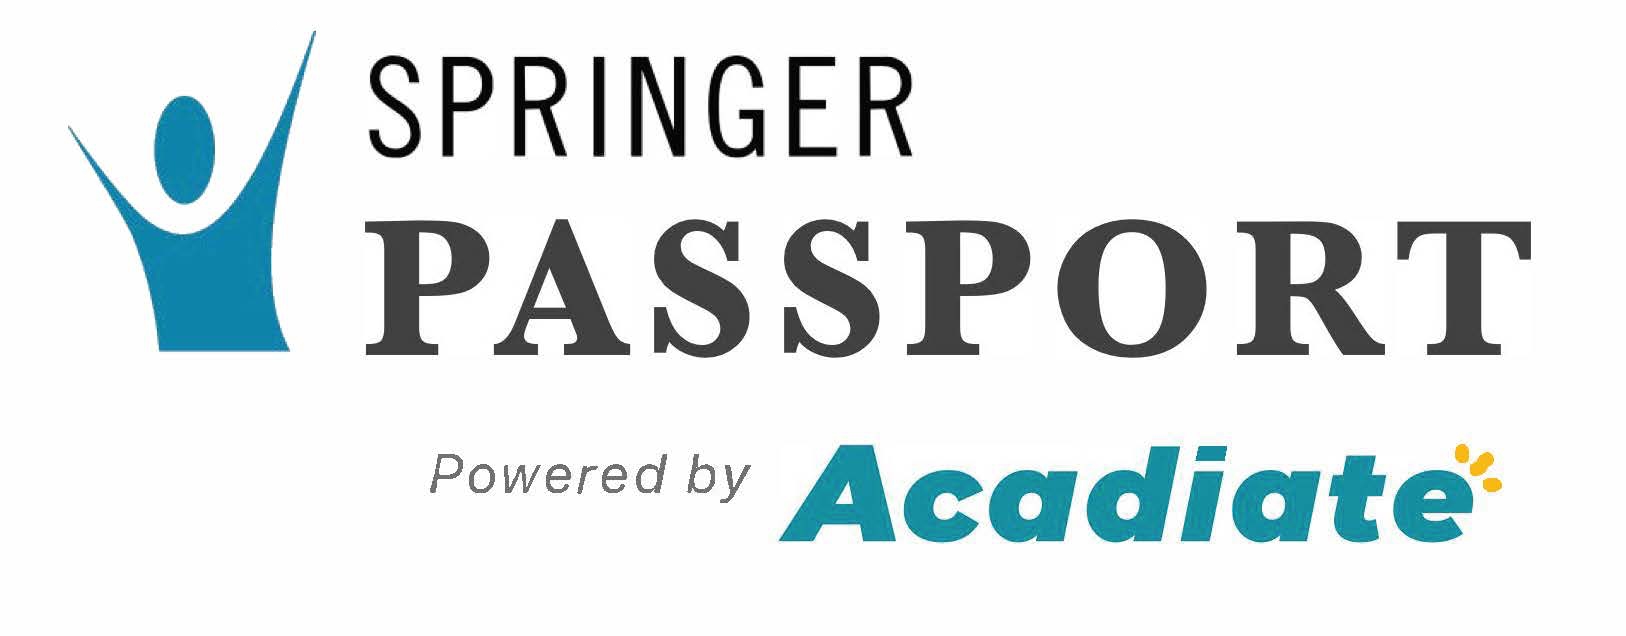 Springer Nursing Passport Events